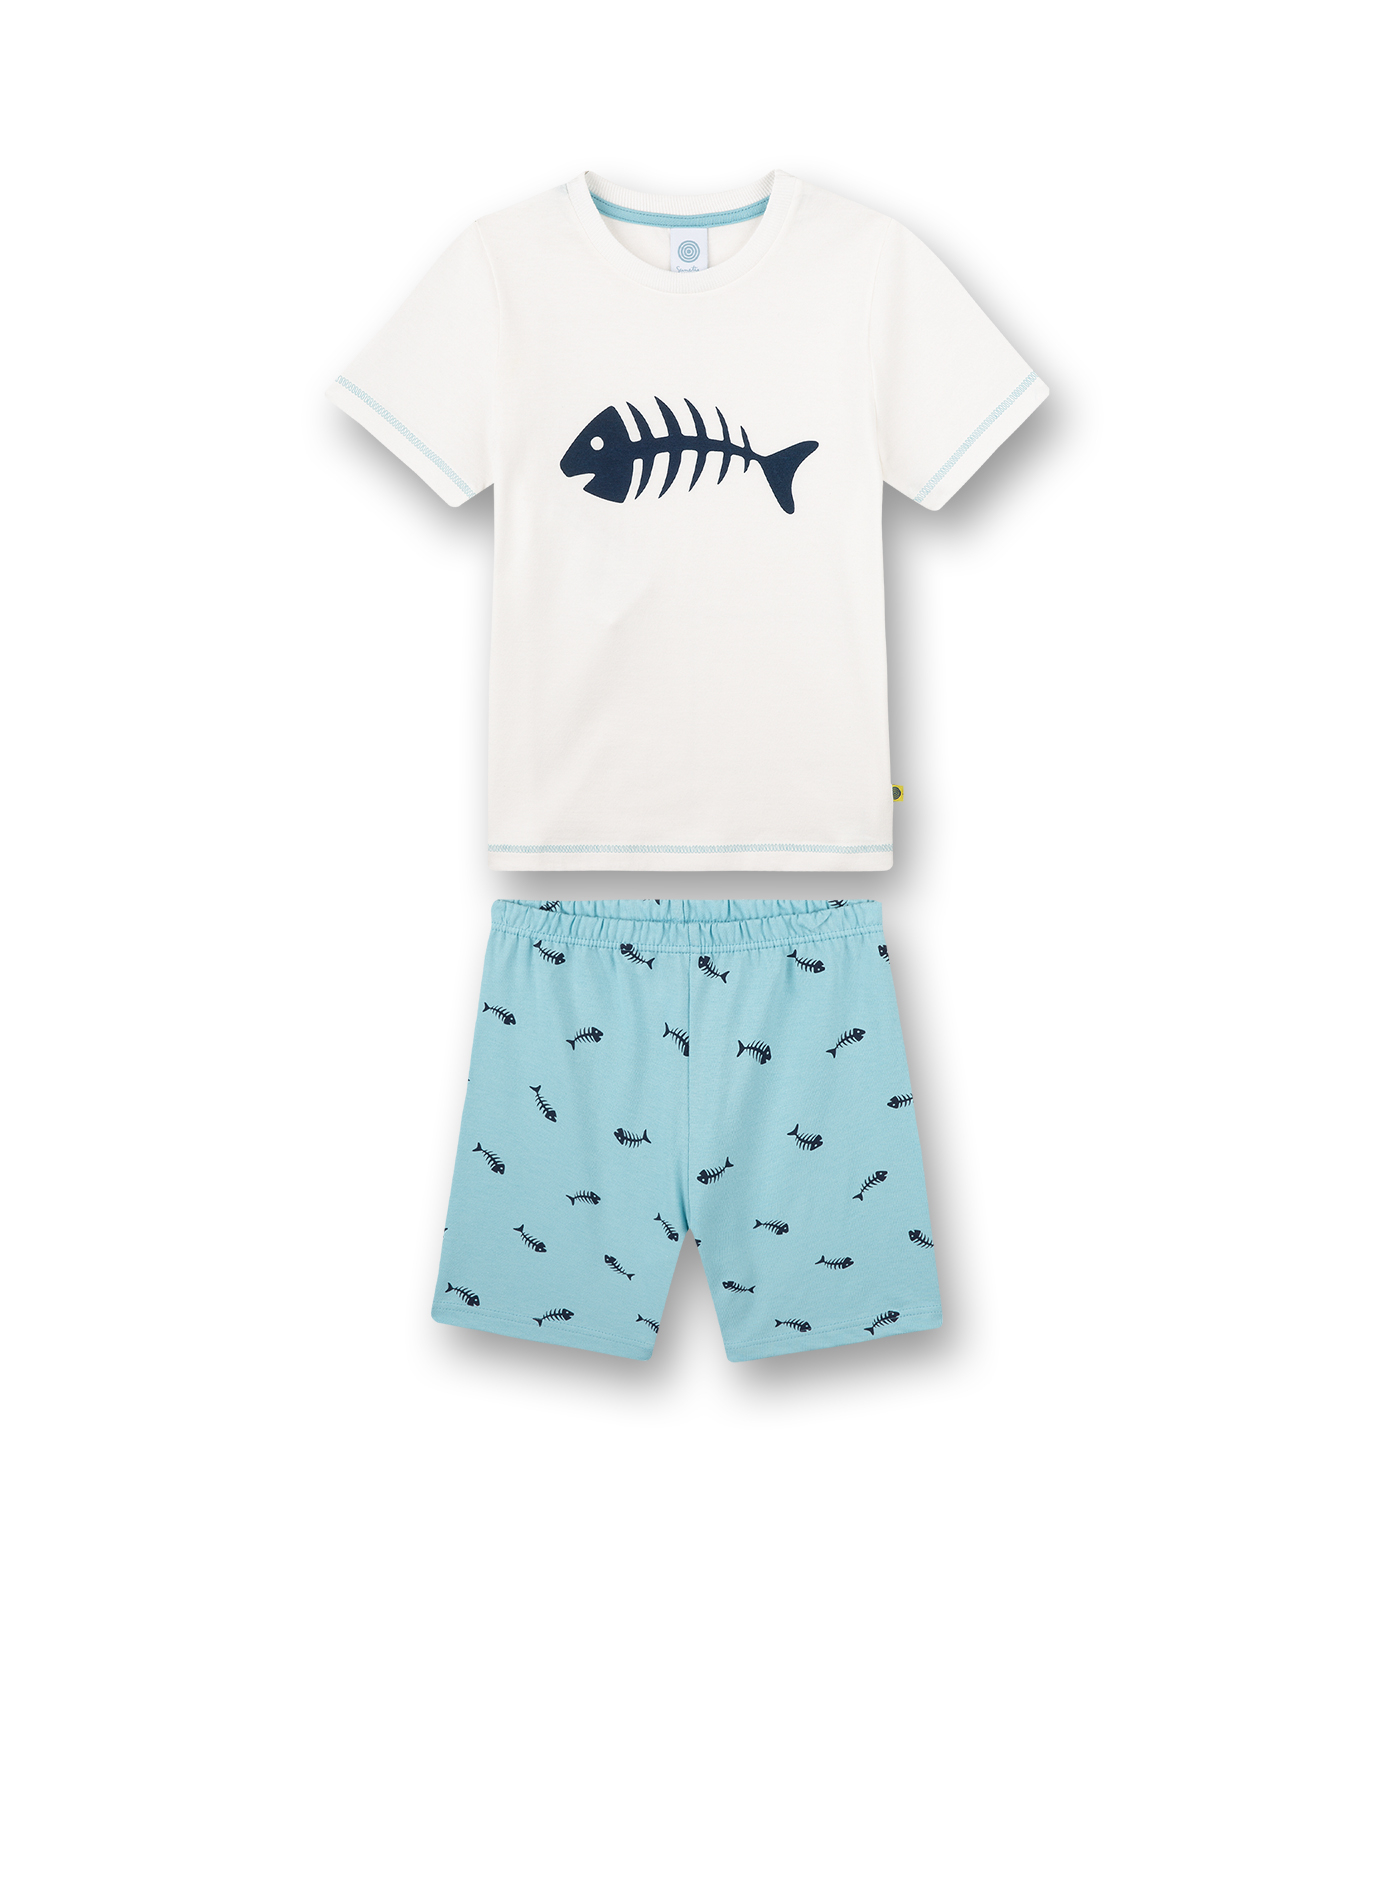 Jungen-Schlafanzug kurz Weiß Sun, Palms and Beach